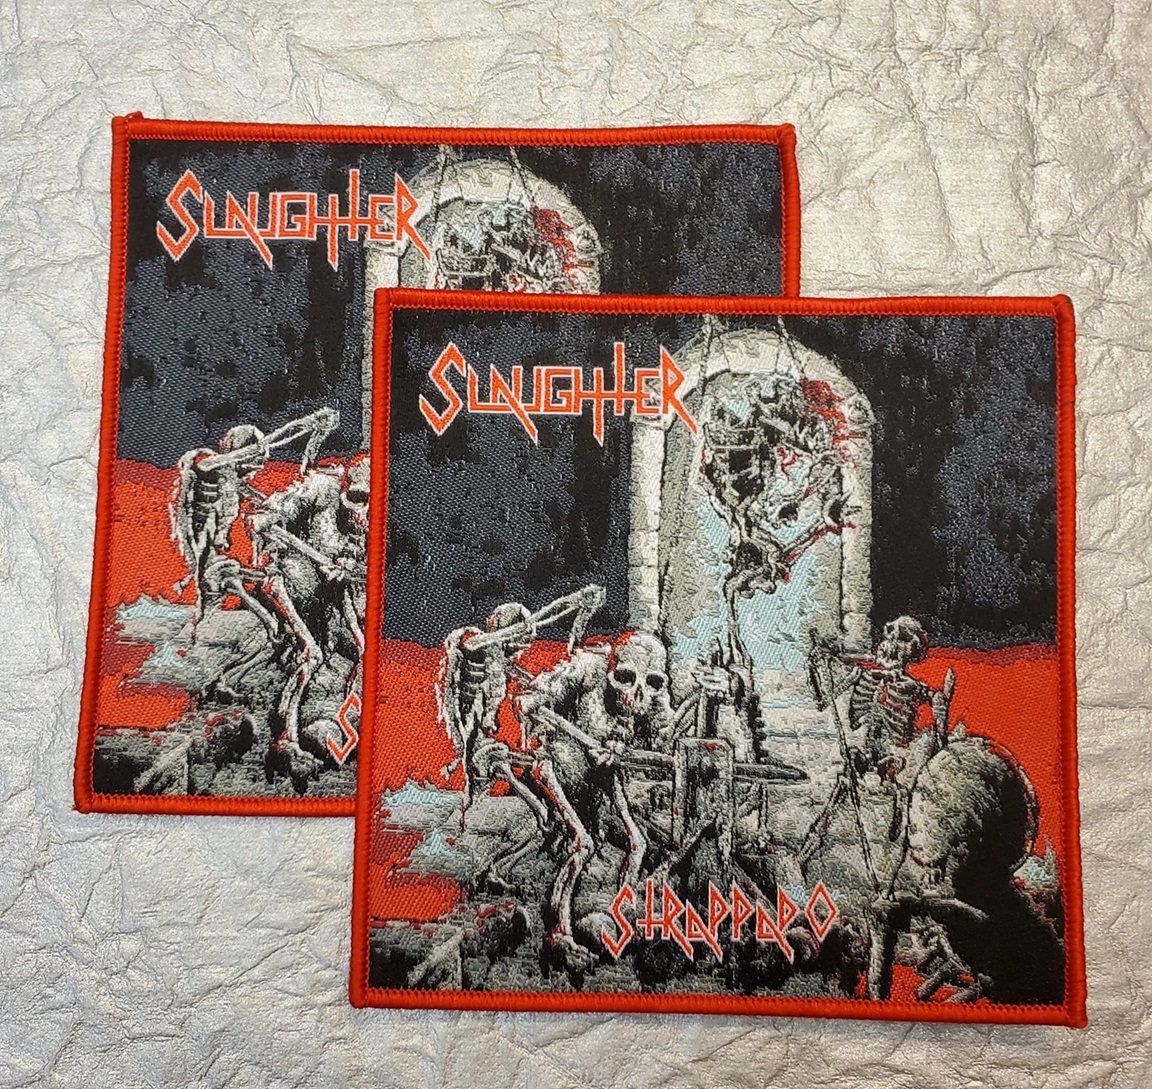 Slaughter - Strappado